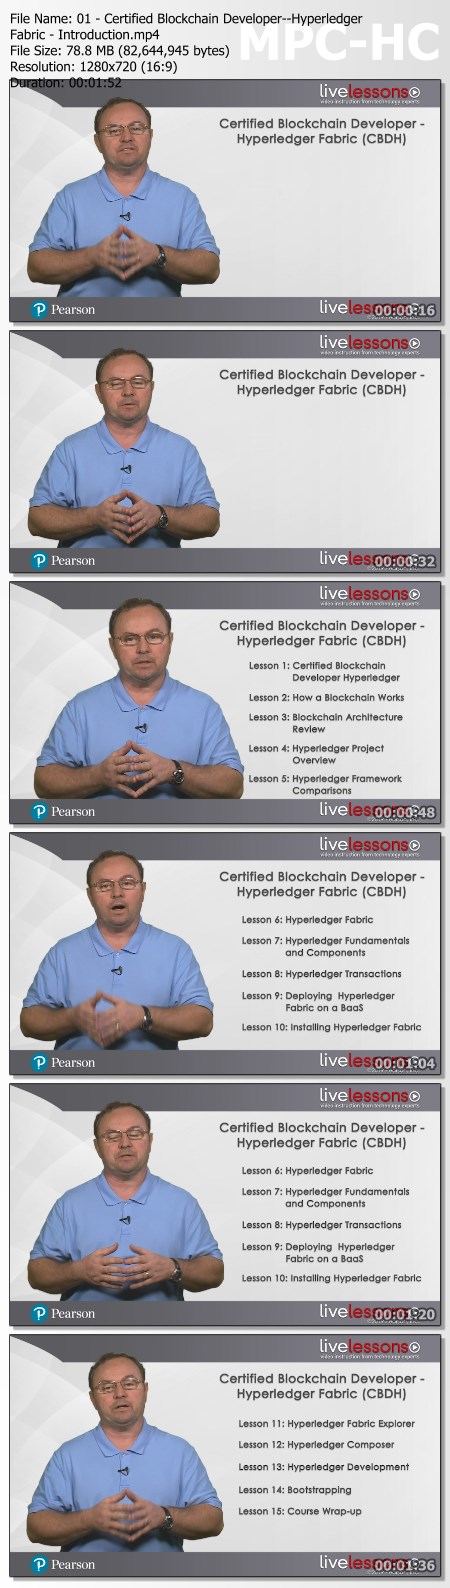 Hyperledger Fabric Certified Blockchain Developer